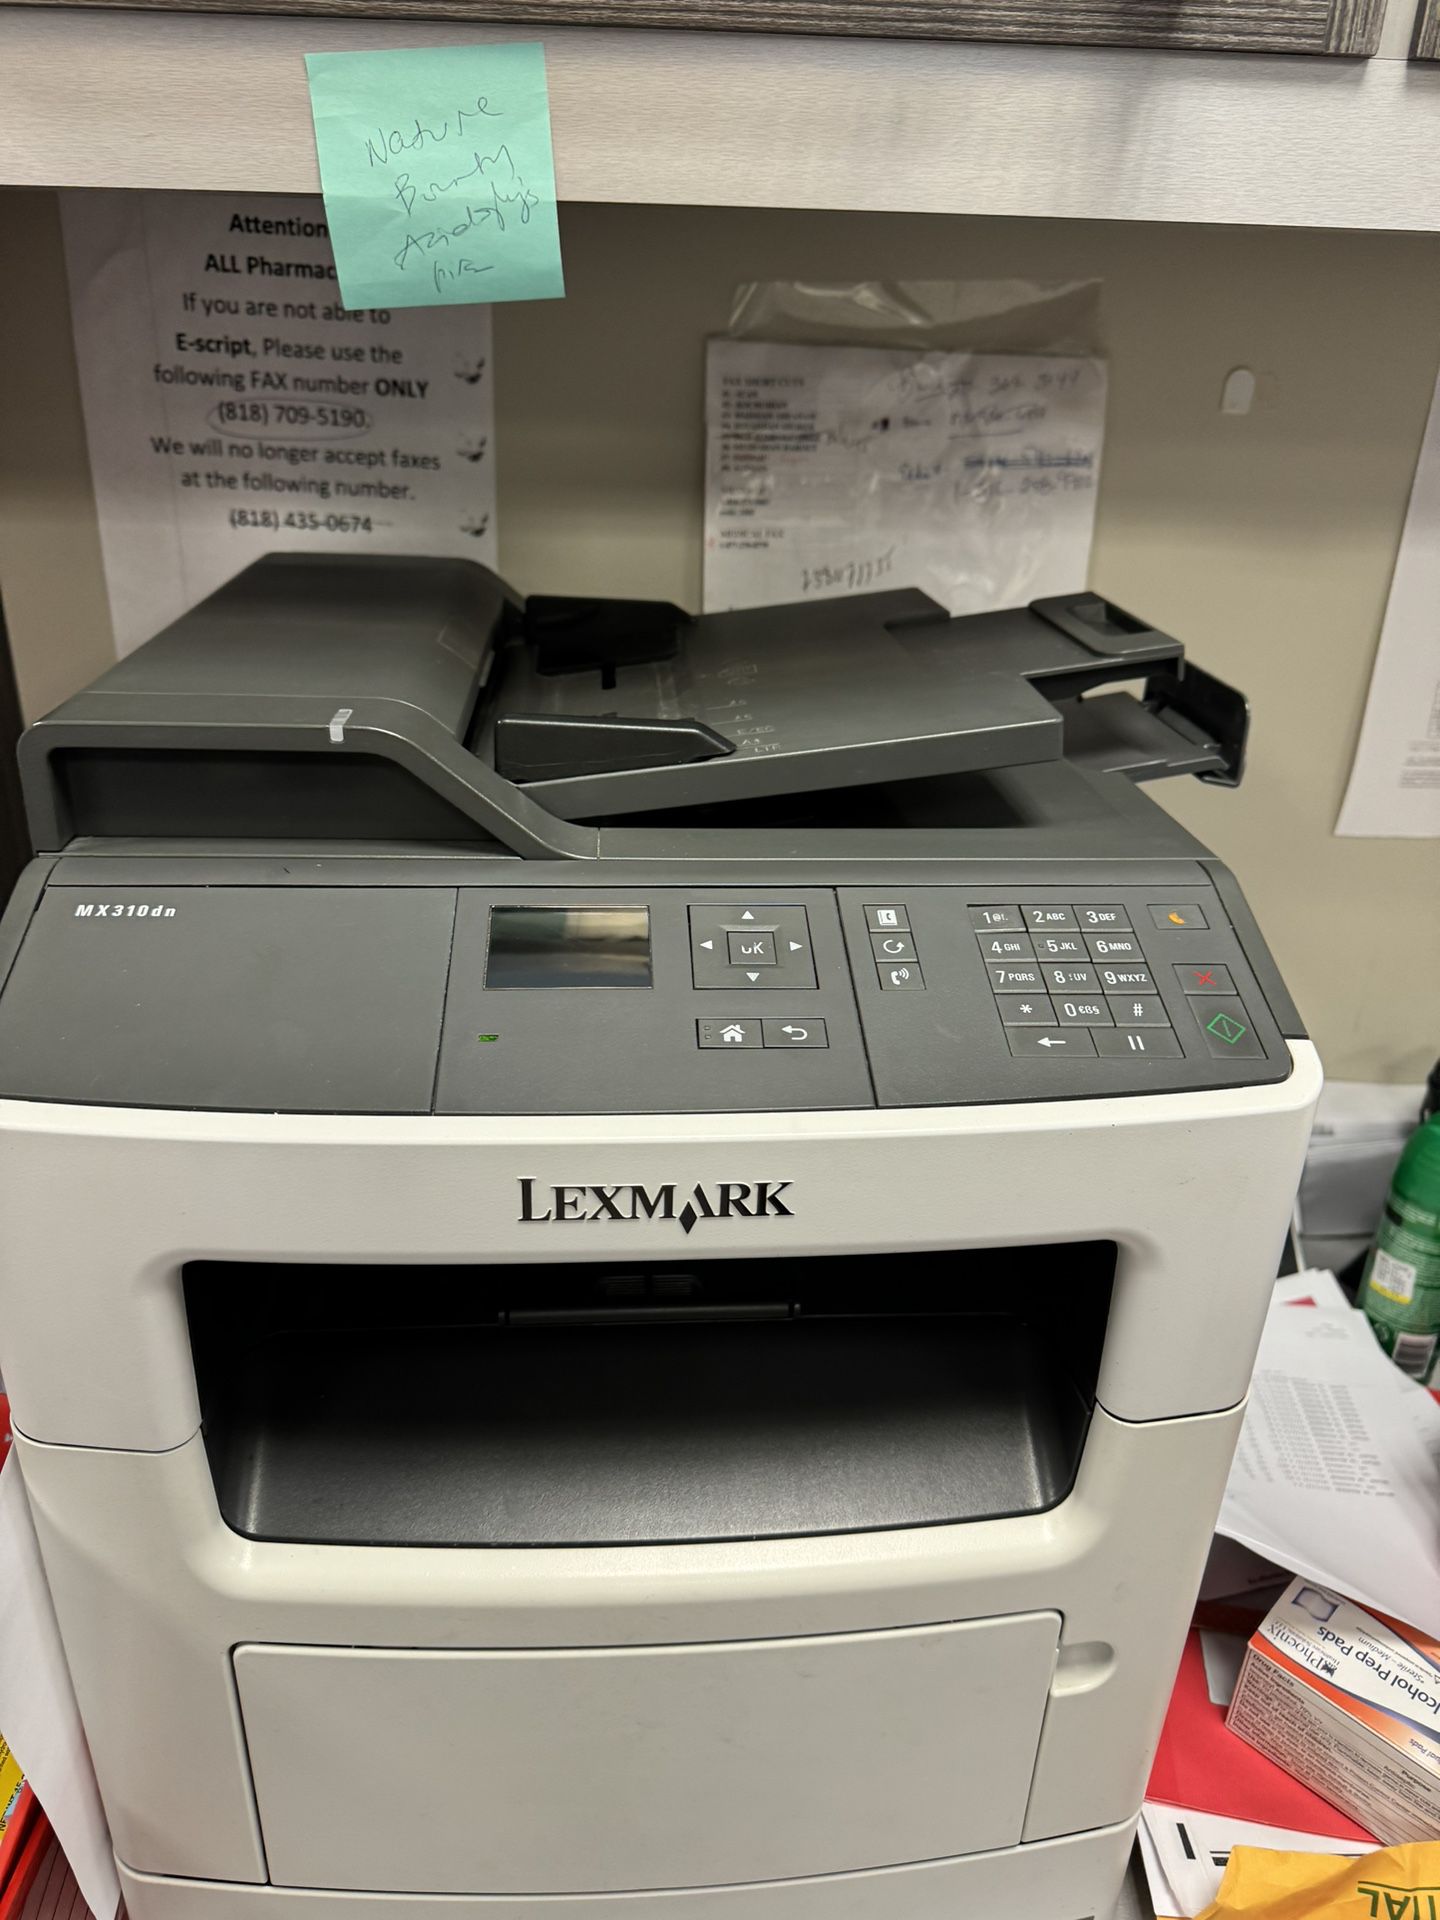 Lexmark MX310dn Laser Printer/Fax